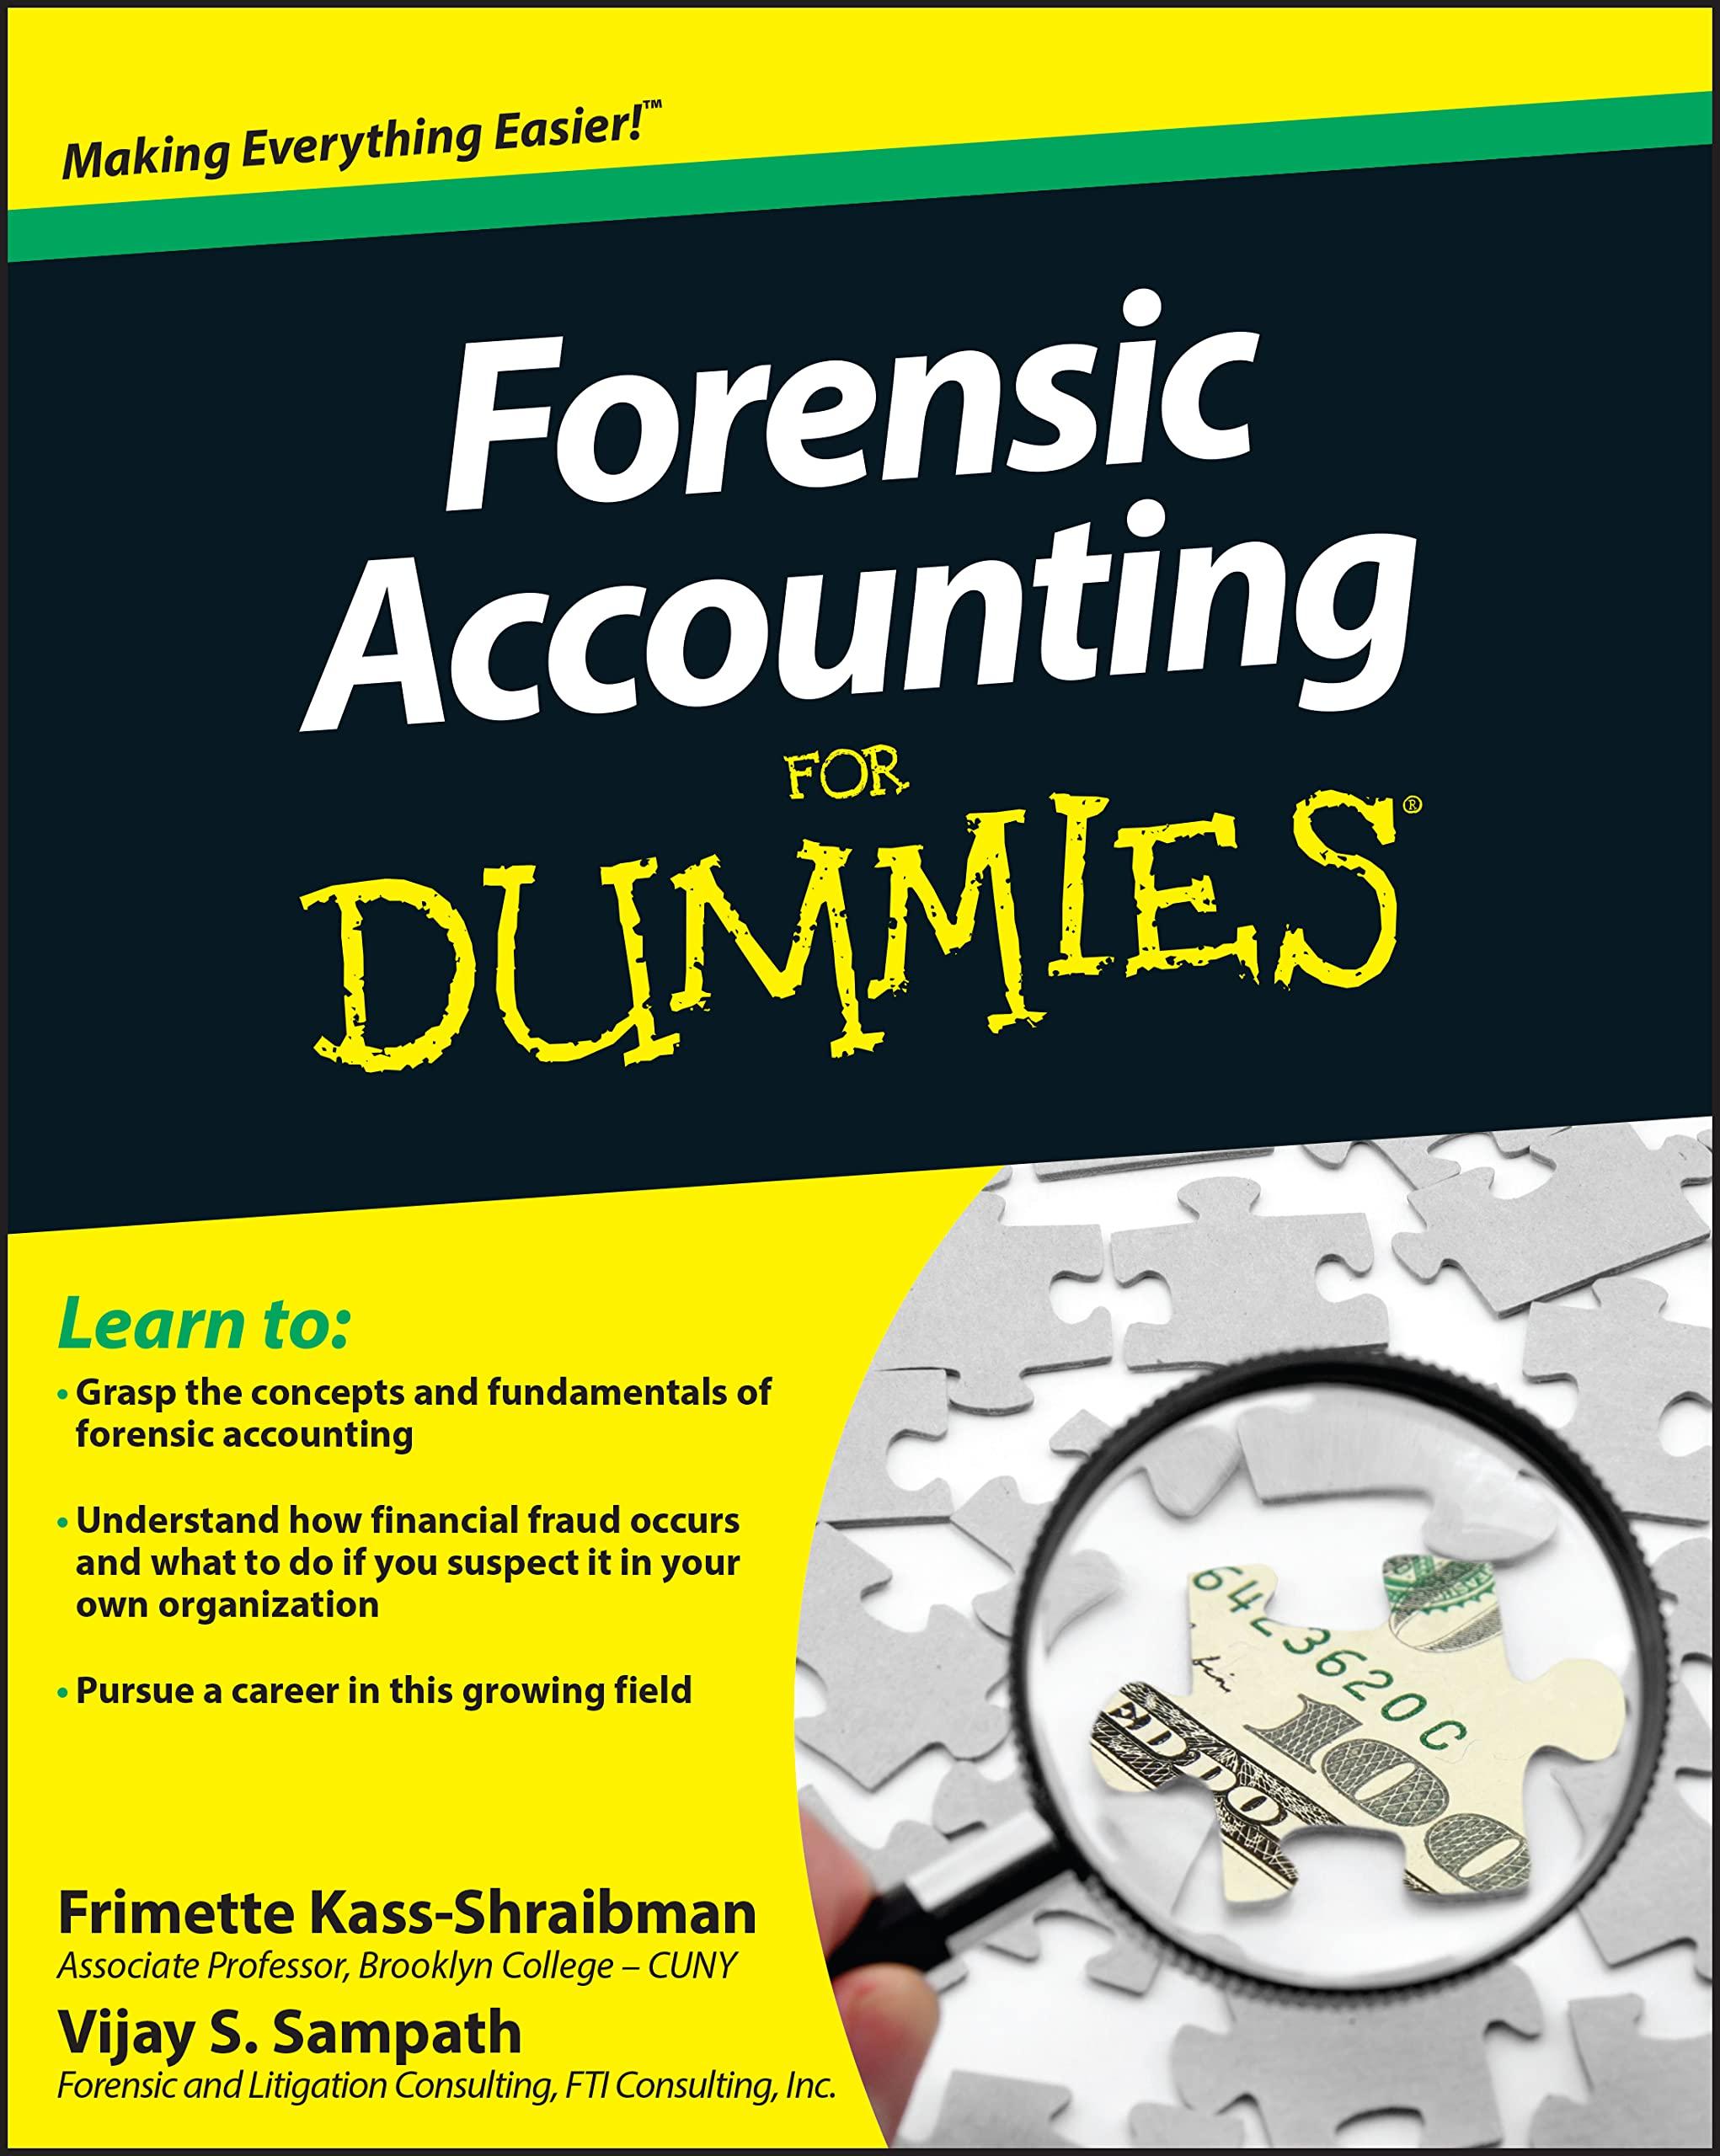 forensic accounting for dummies 1st edition frimette kass-shraibman, vijay s. sampath 0470889284,